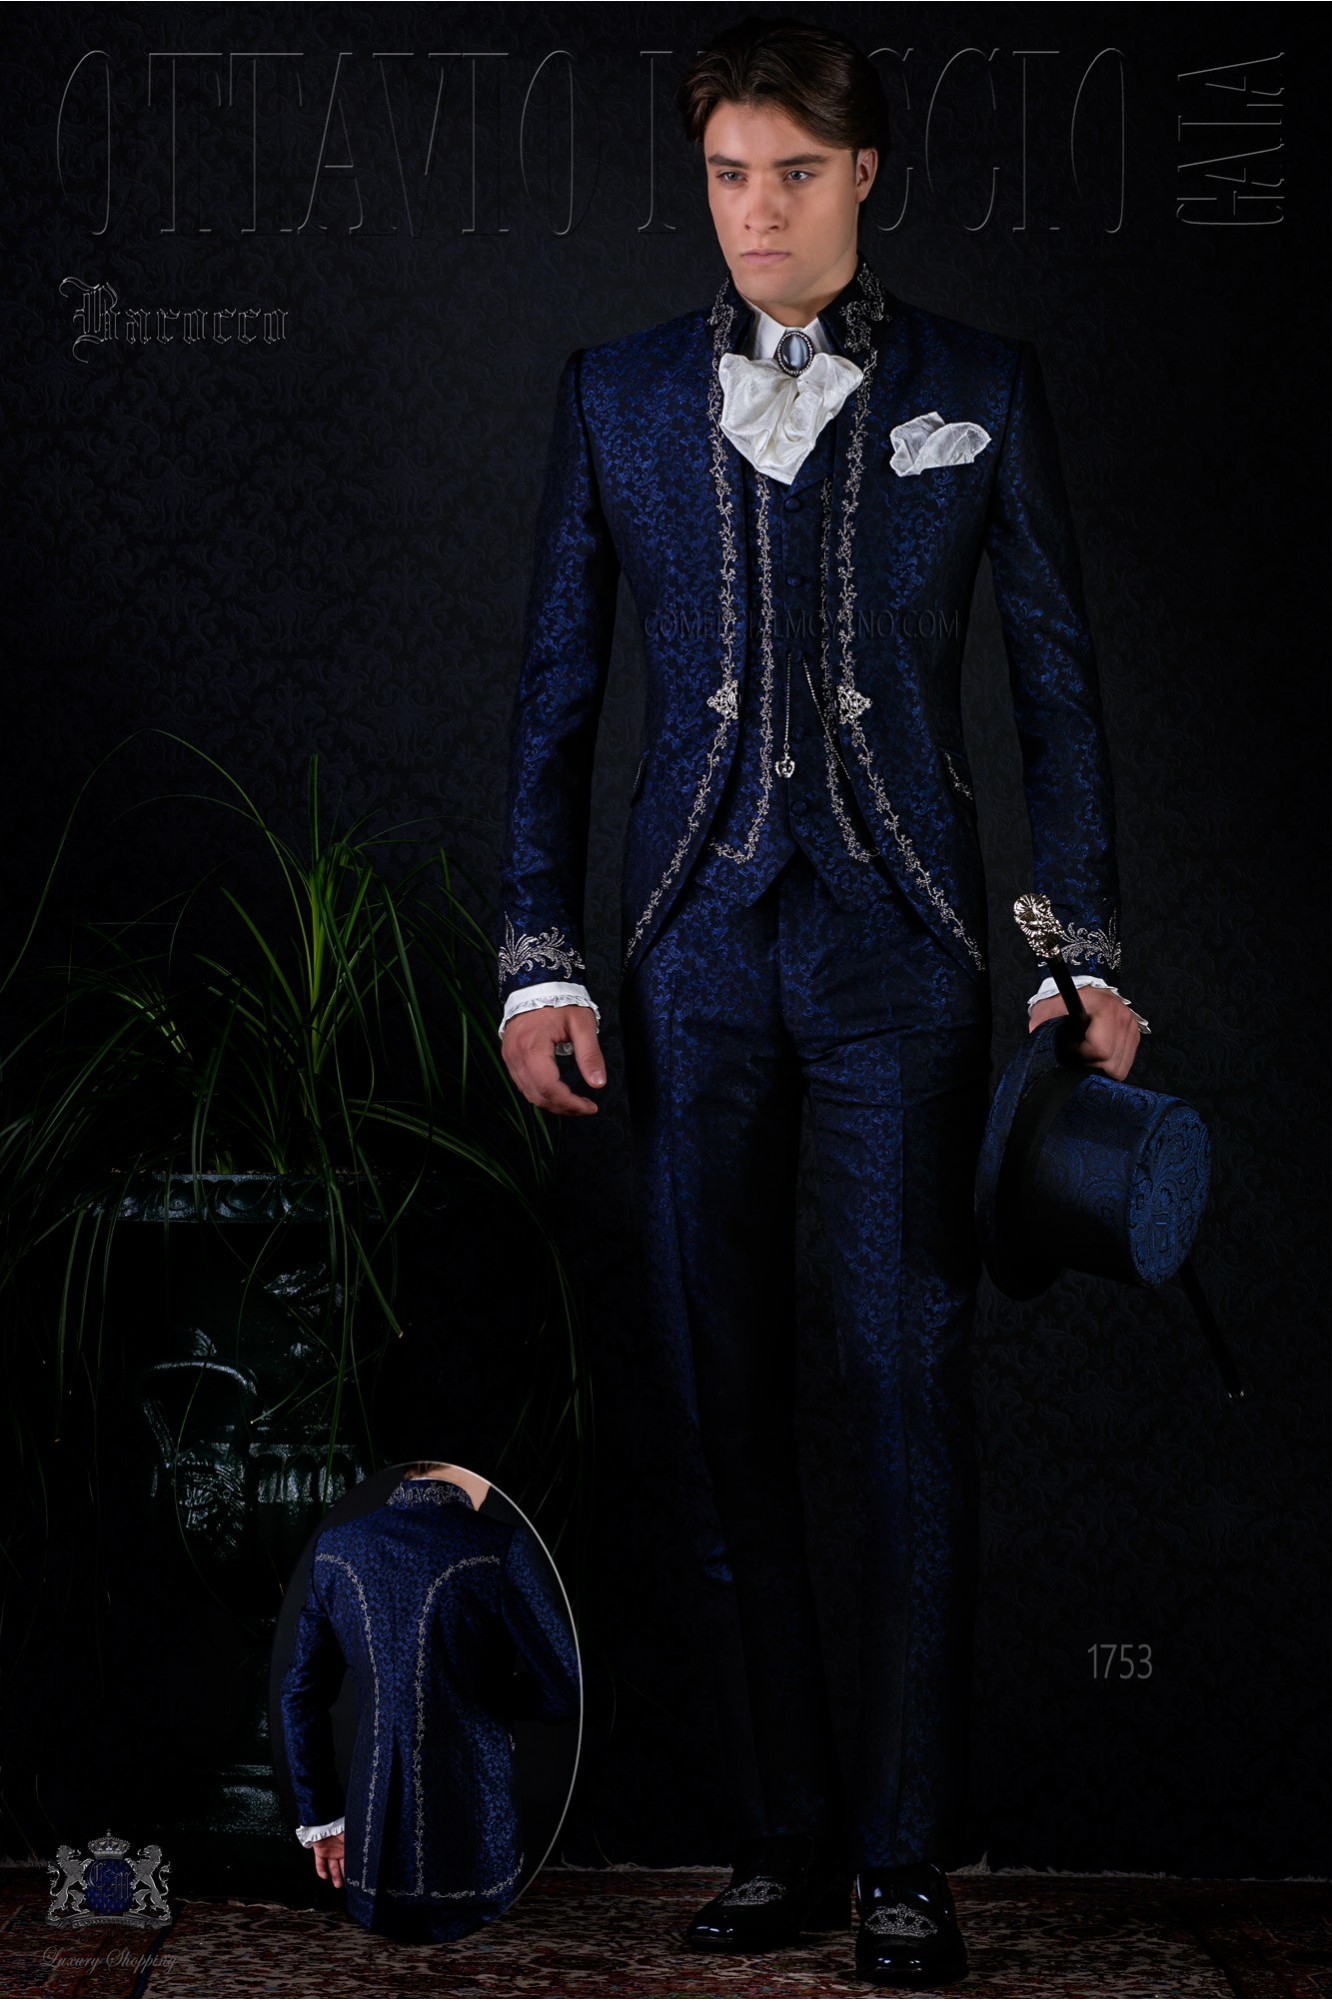 Traje de época modelo redingote brocado azul bordado modelo: 1753 Mario Moyano colección Barroco